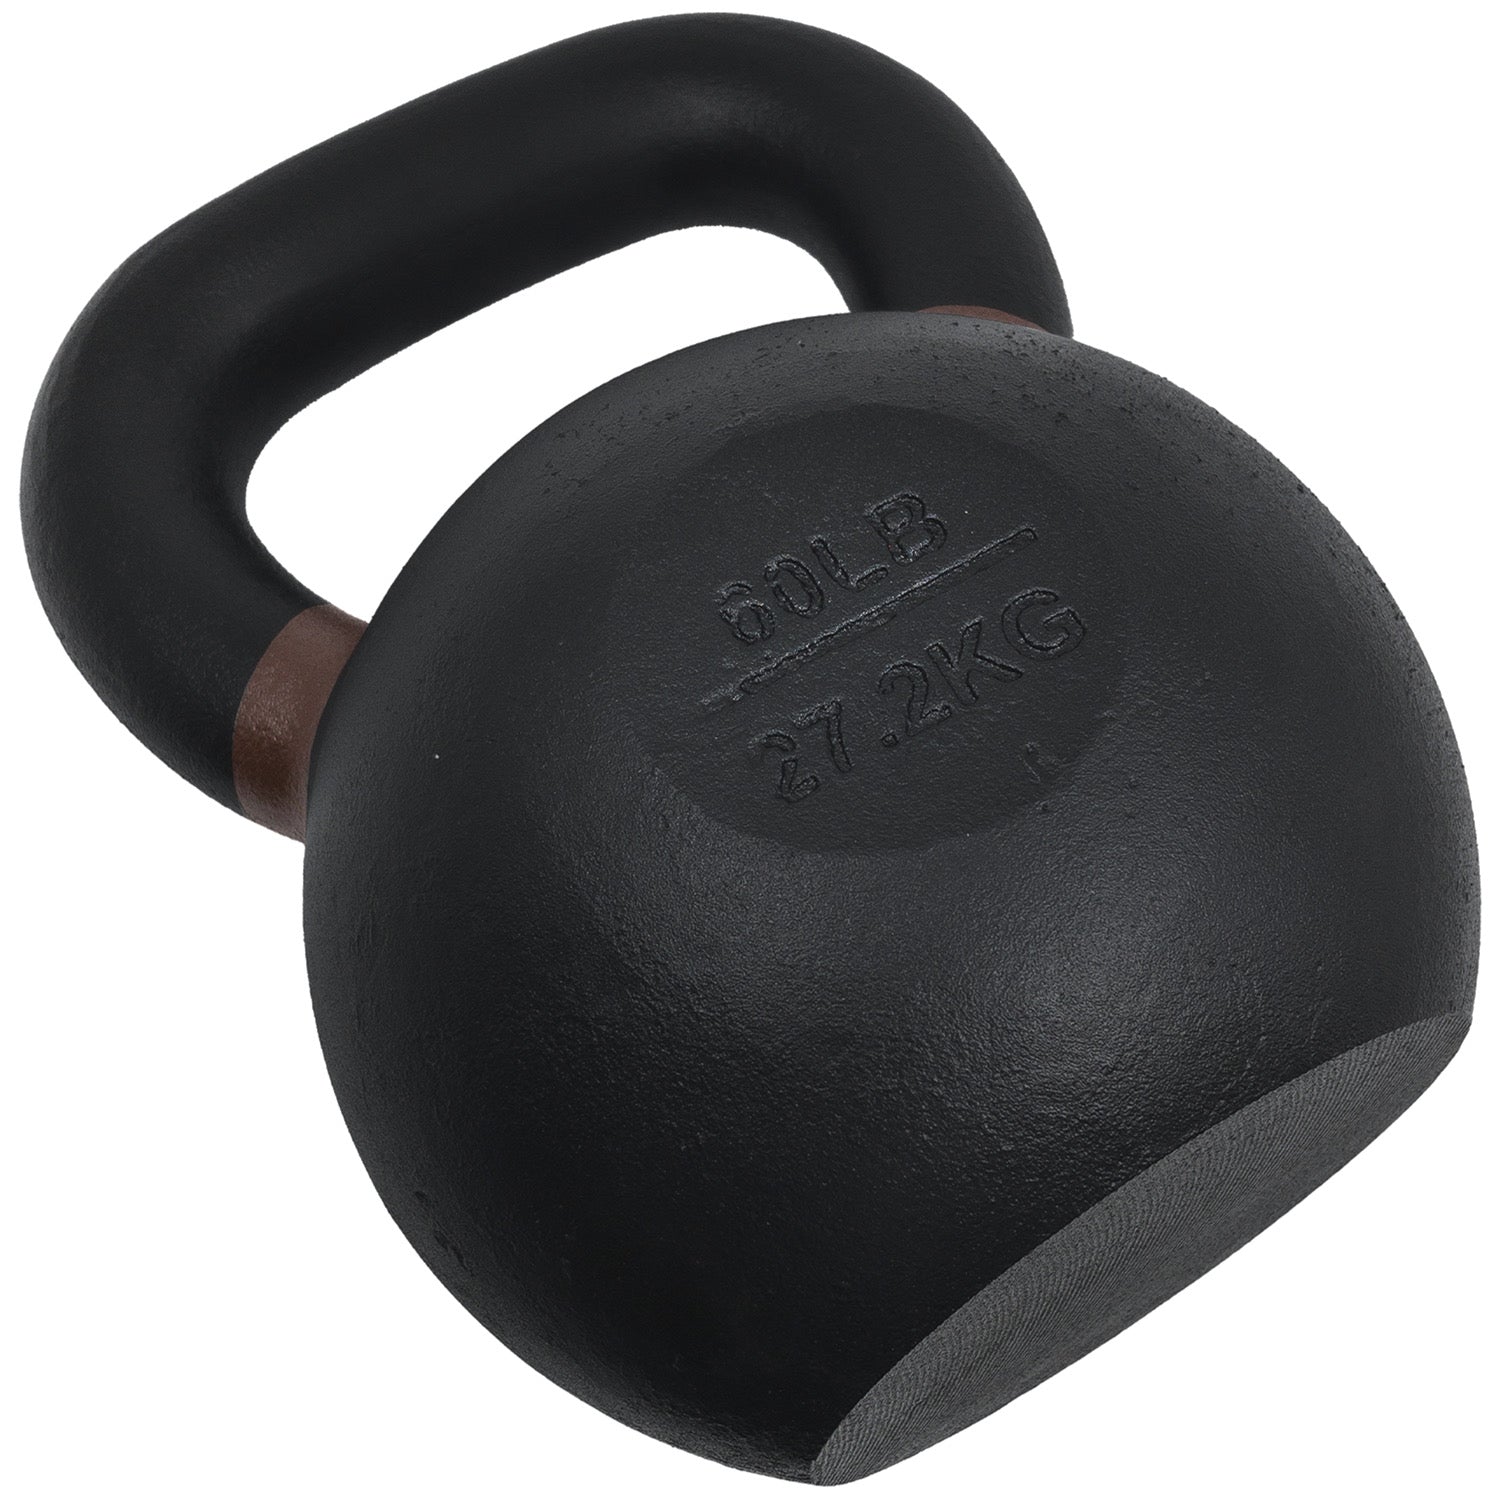 RHINO Fitness® Iron Kettlebell Series 60 lb RHINO Fitness fitness kettlebell Resistance Training